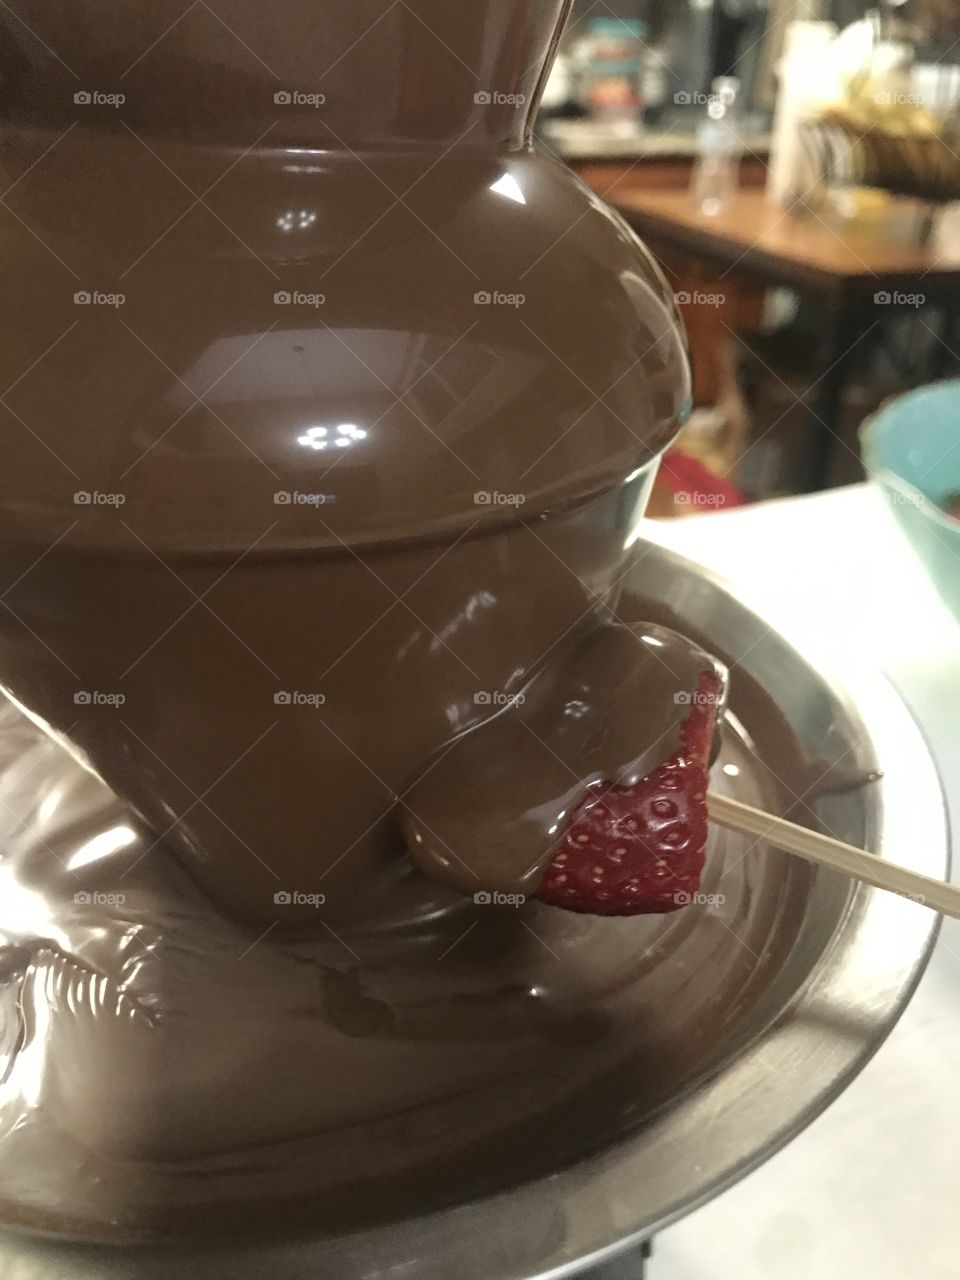 Chocolate fountain of yummy 